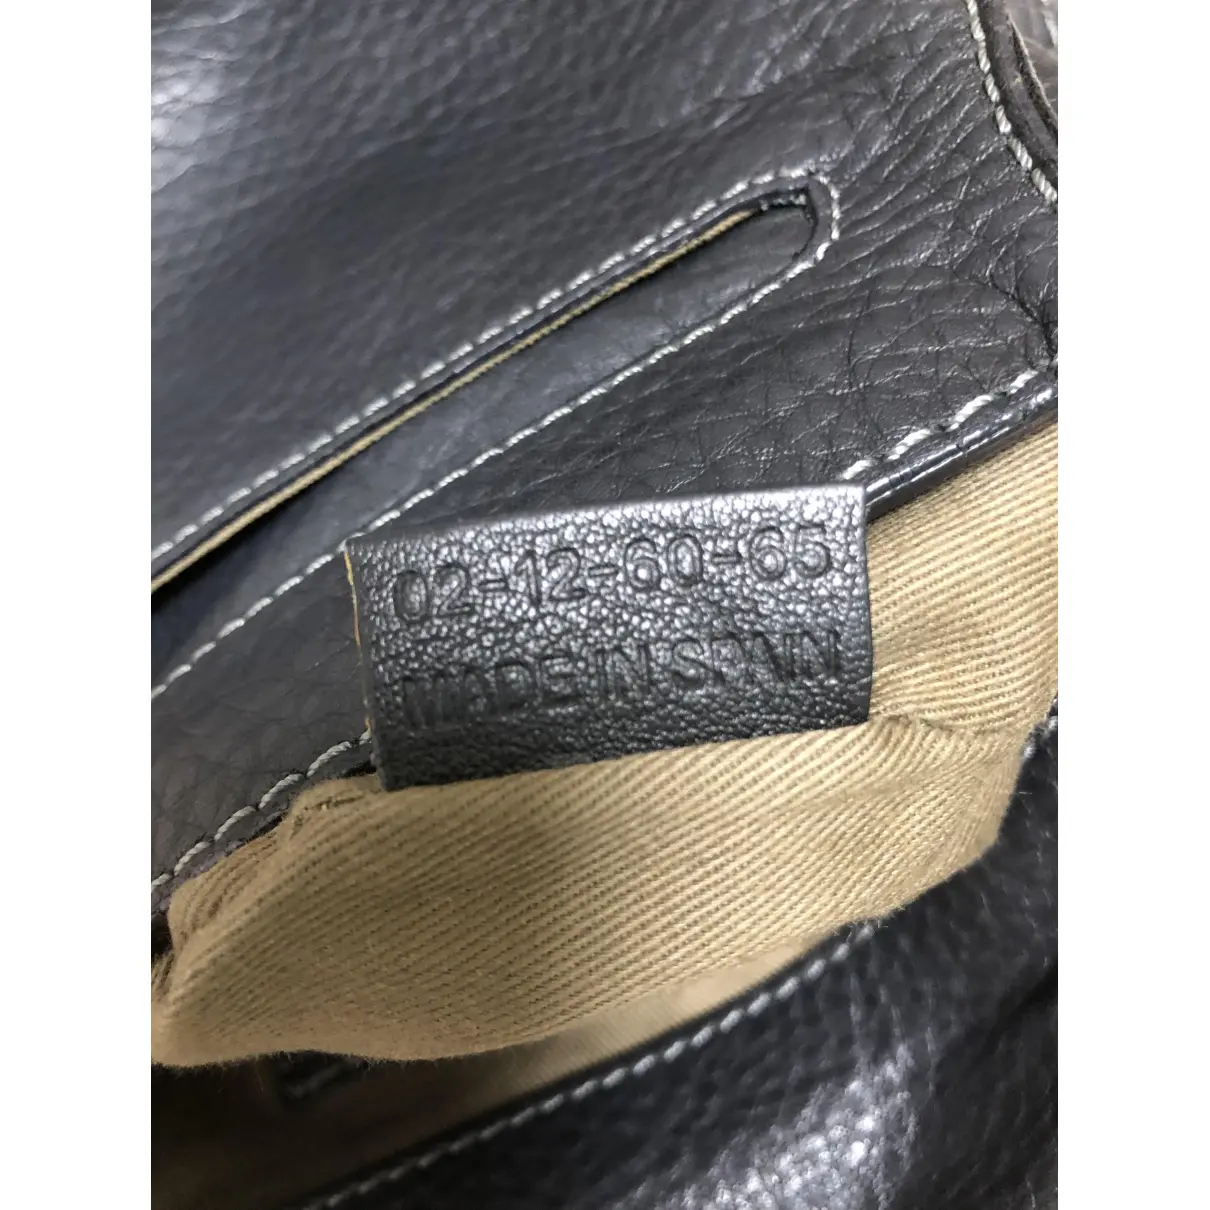 Buy Chloé Marcie leather crossbody bag online